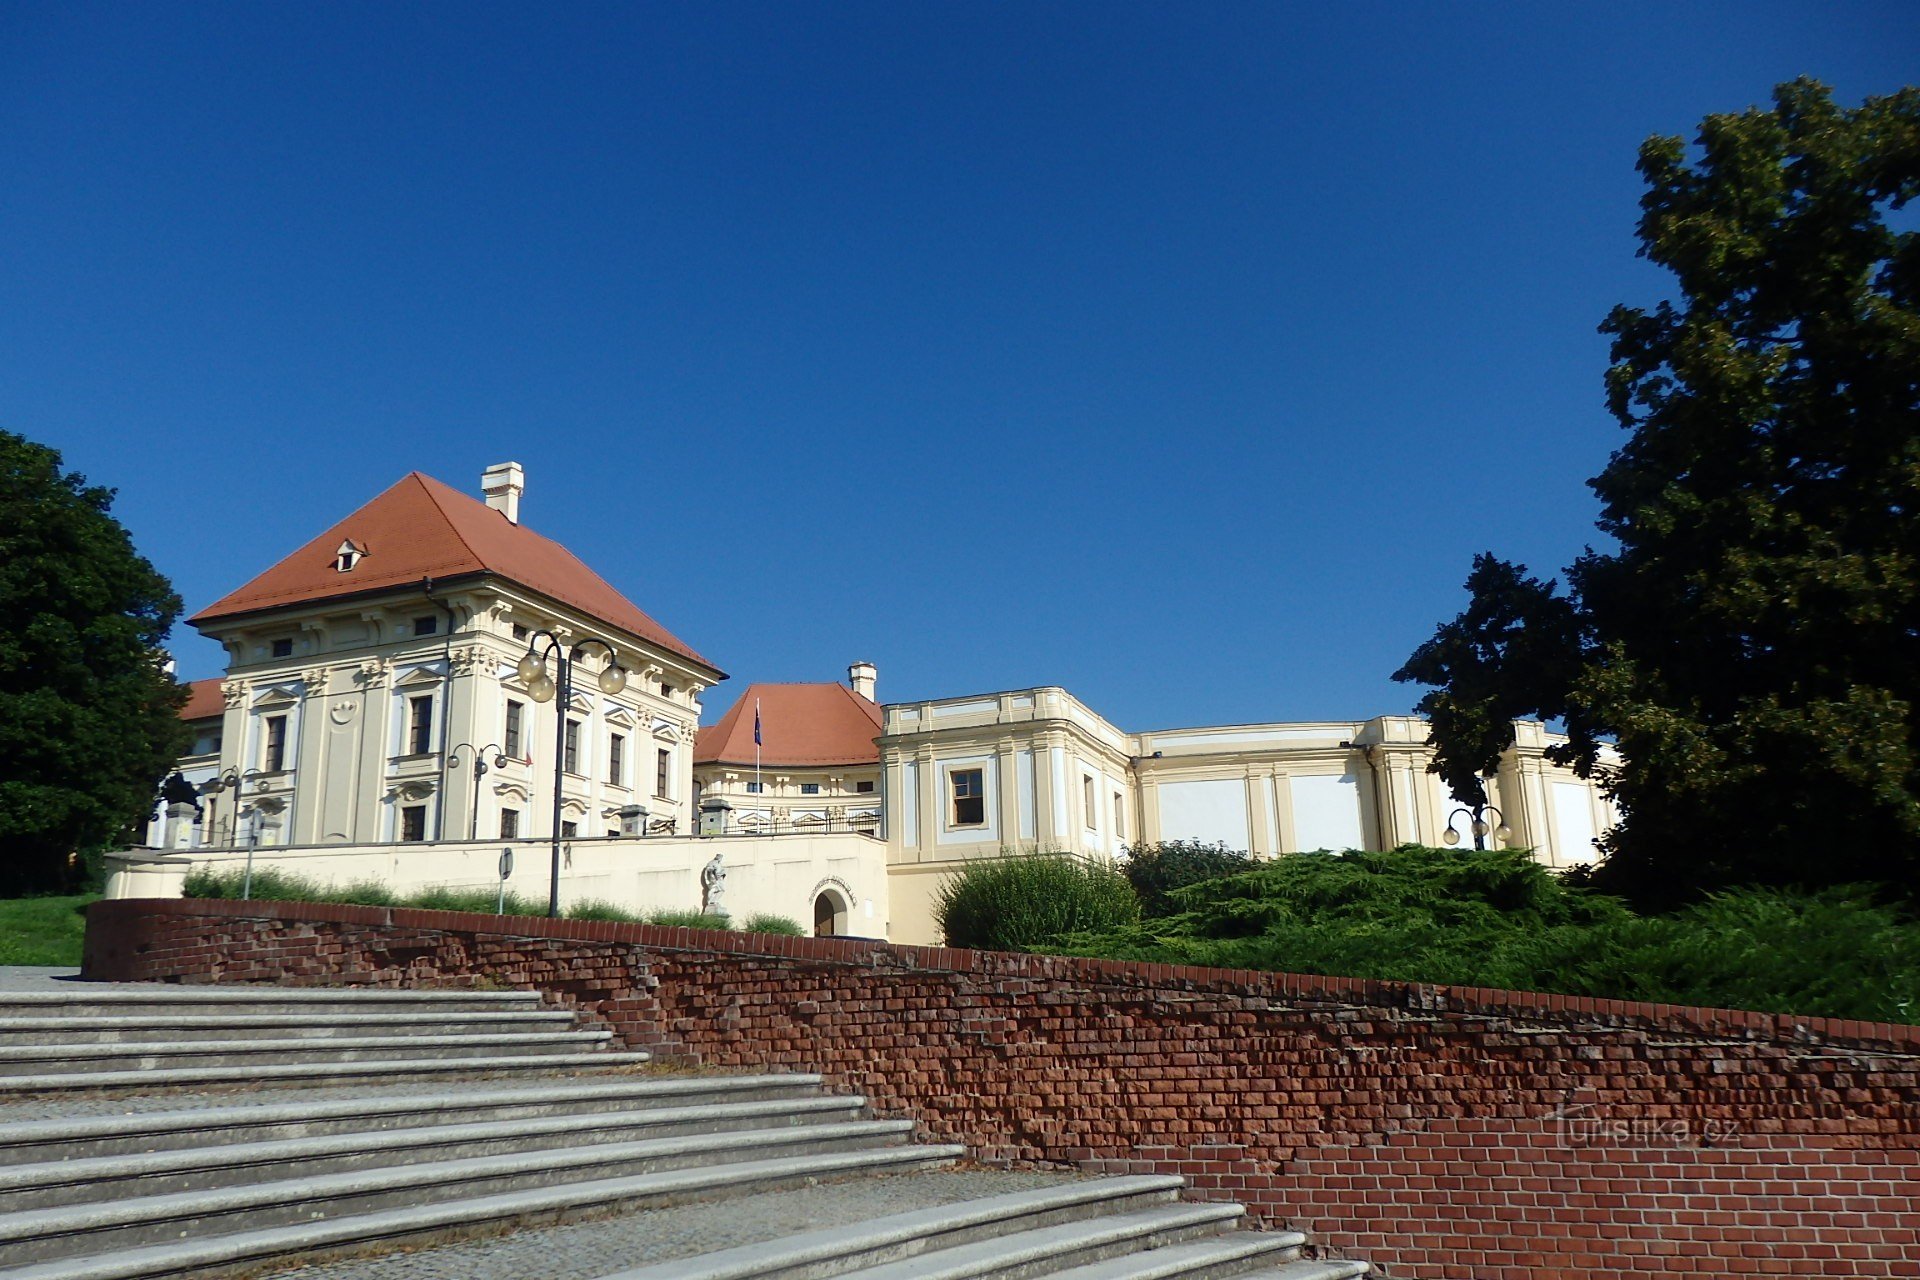 dvorac Slavkov kod Brna